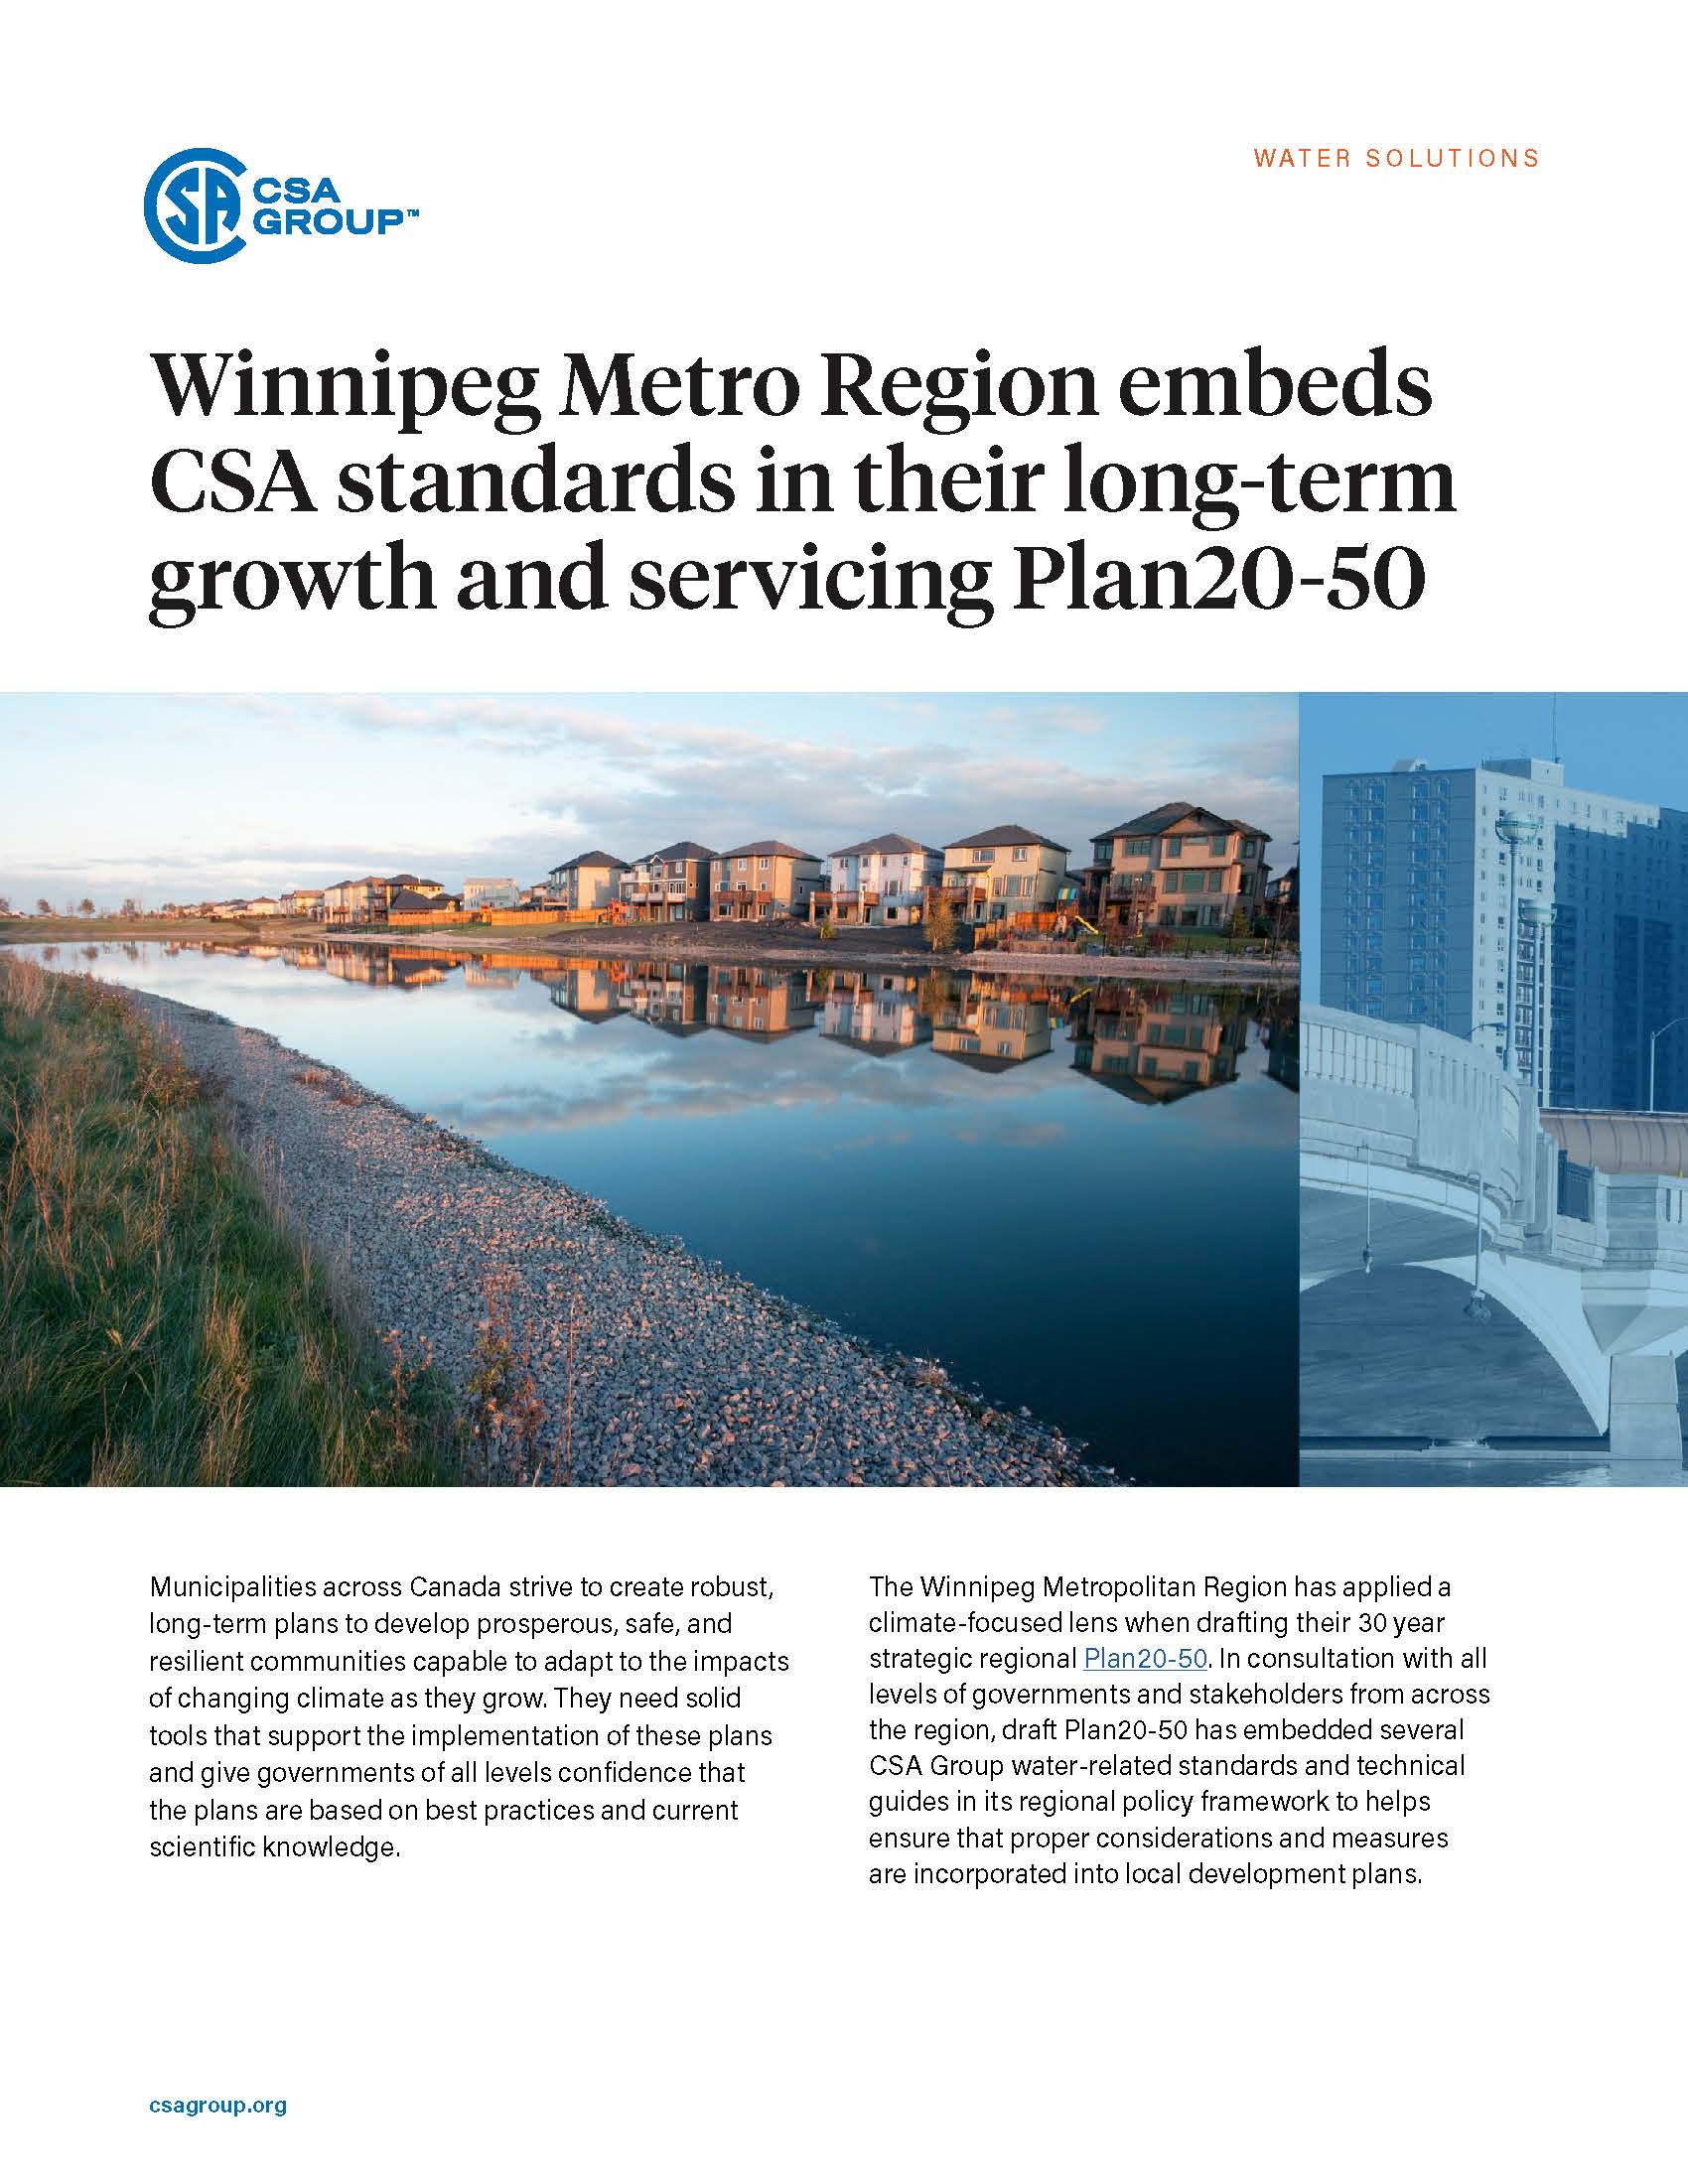 Winnipeg Metro Region embeds CSA Group standards in Plan 20-50